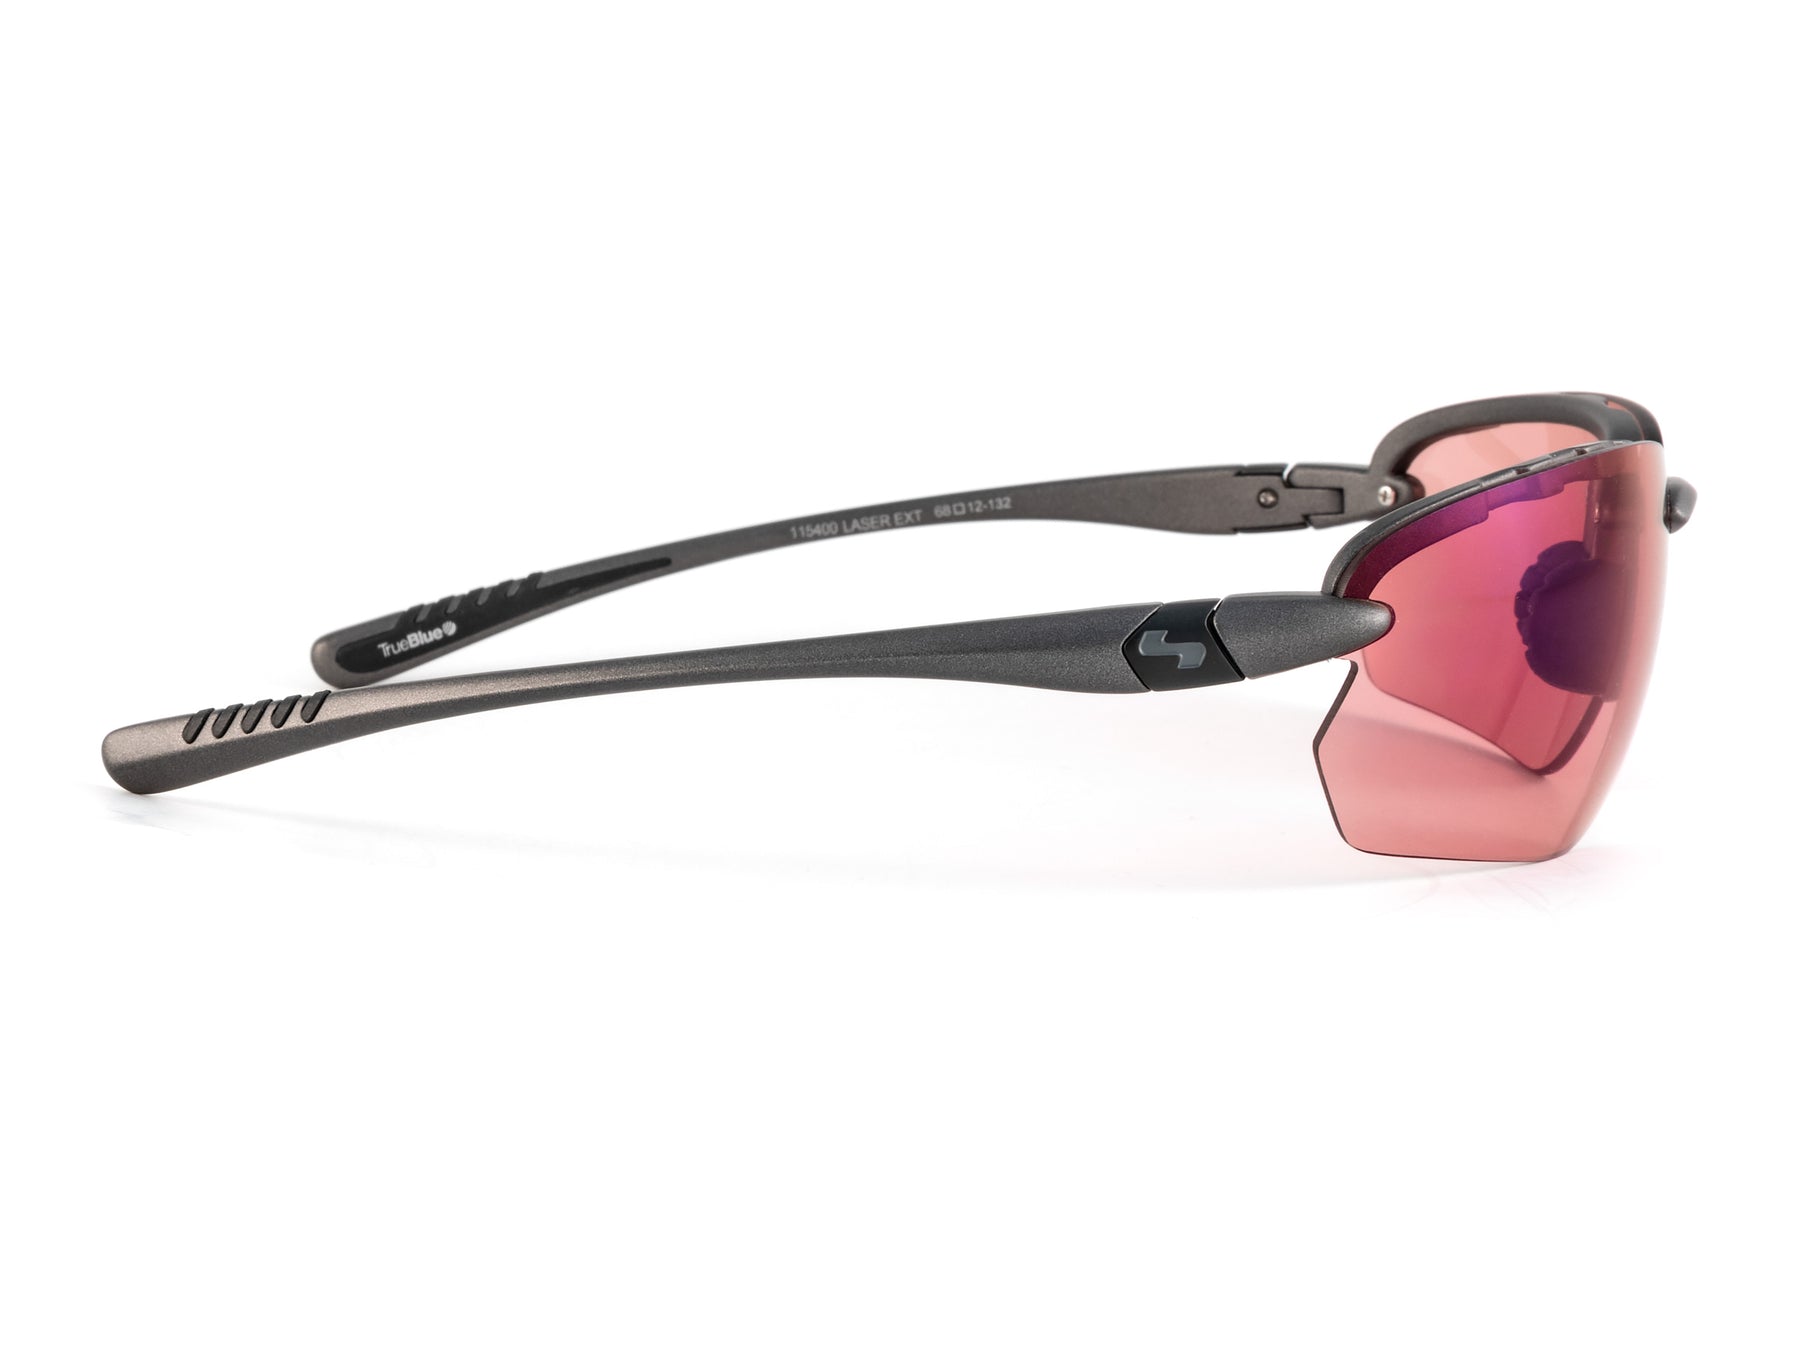  Sundog Eyewear Premium Sunglasses for Men and Women - PRIME EXT  TrueBlue - UV Protection Featured Lens Technology - Great Fit for Golf,  Fishing, Fashion, Aviator, Driving Glasses - Matte Dark